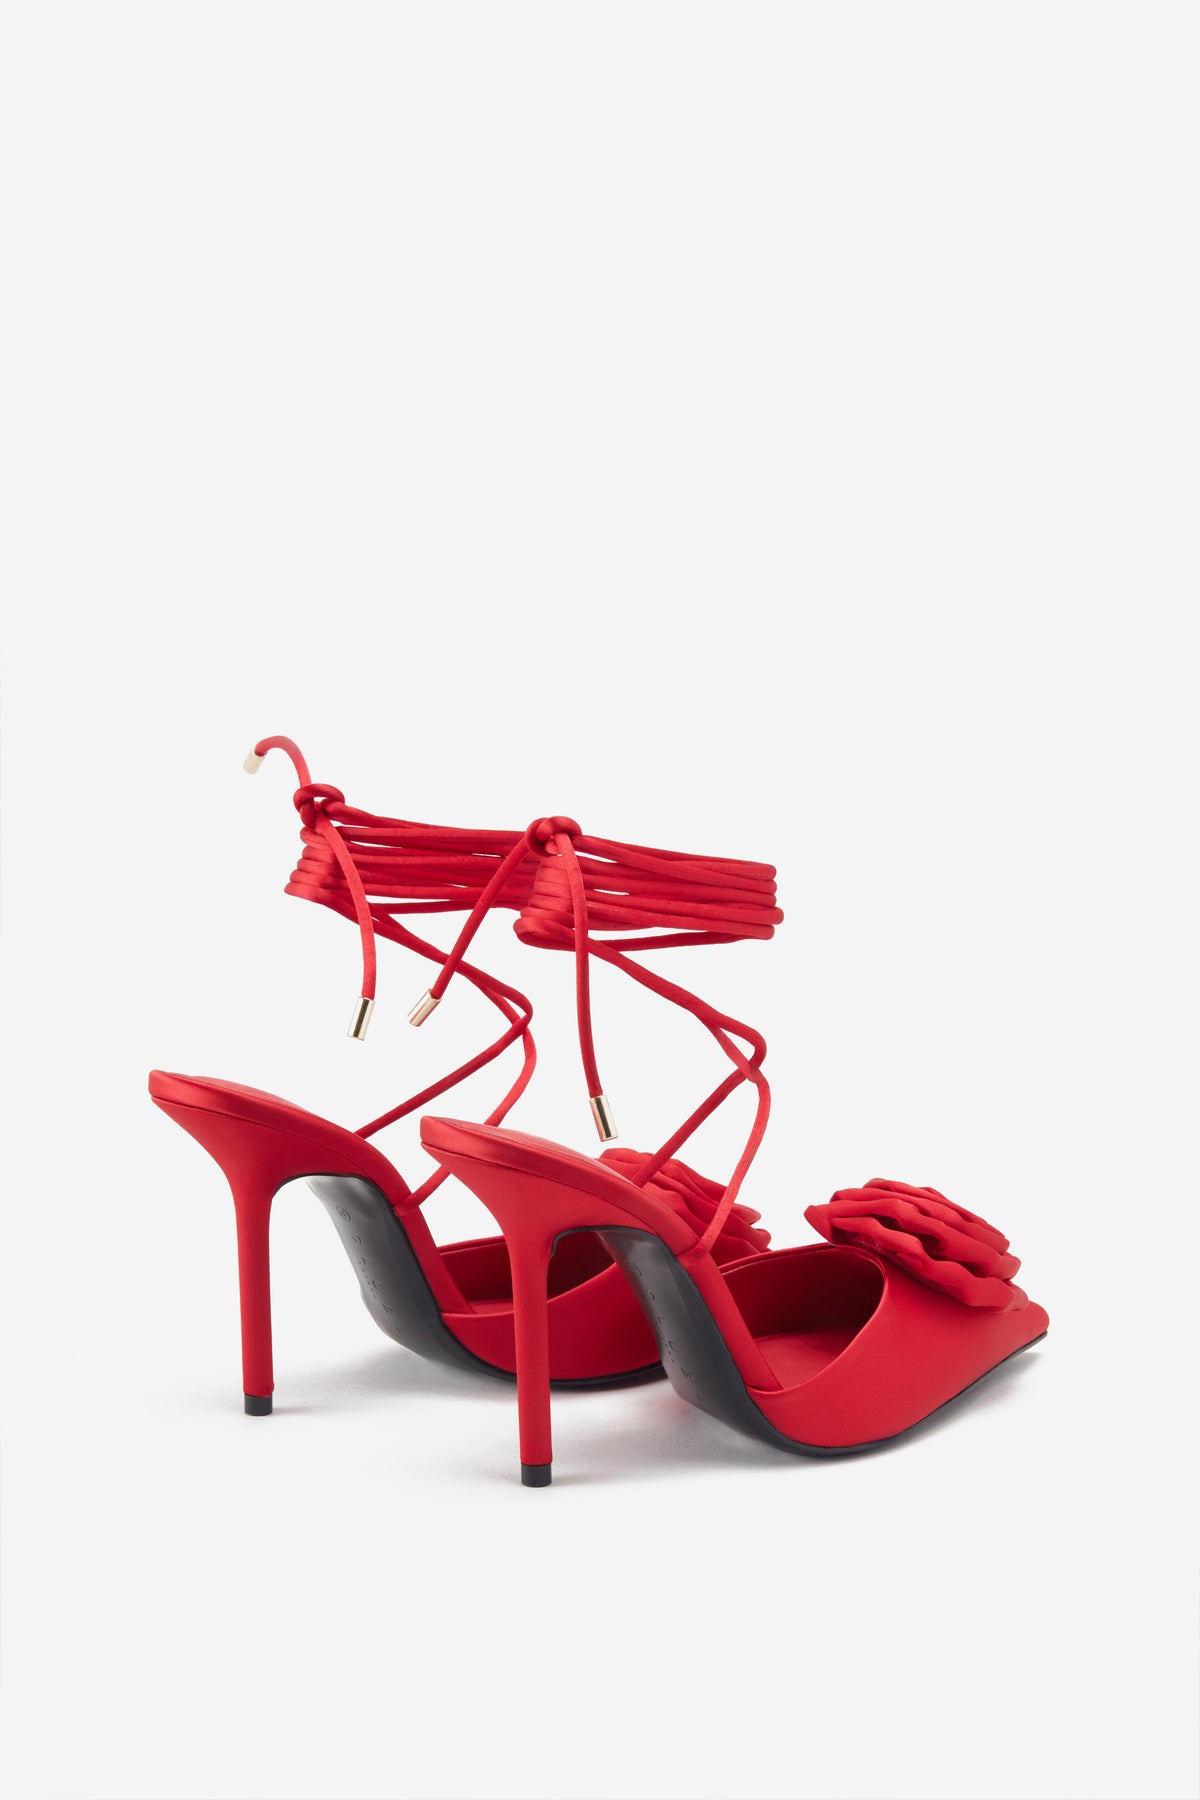 Red Stiletto Heels - Buy Red Stiletto Heels online in India